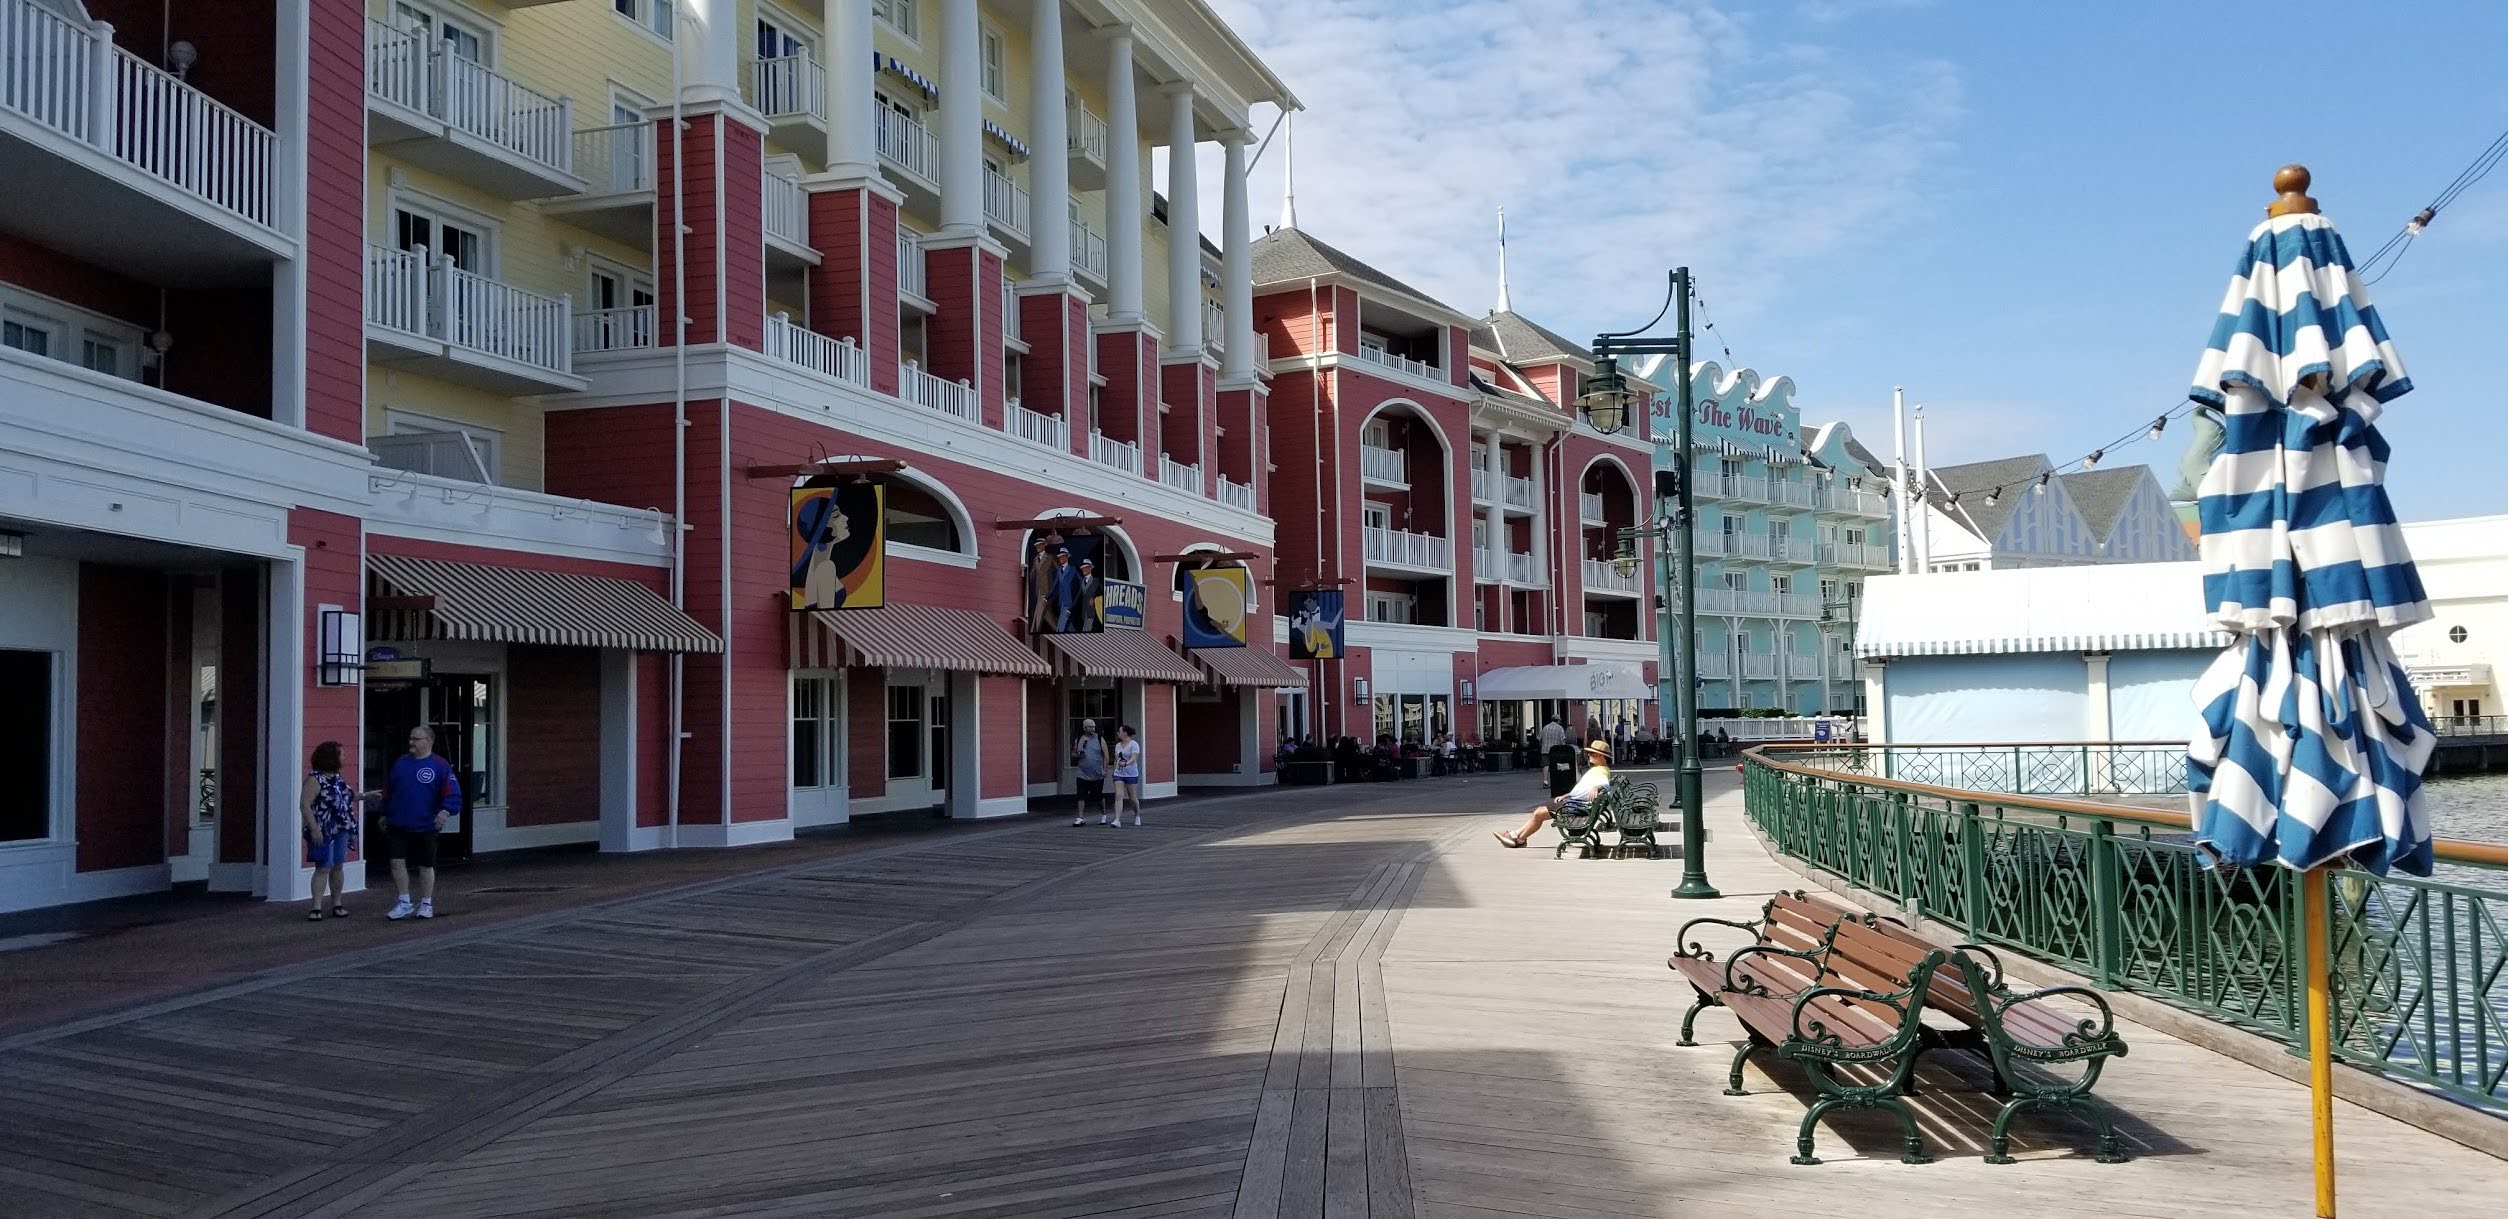 Disney's Boardwalk Inn will be reopening this summer!